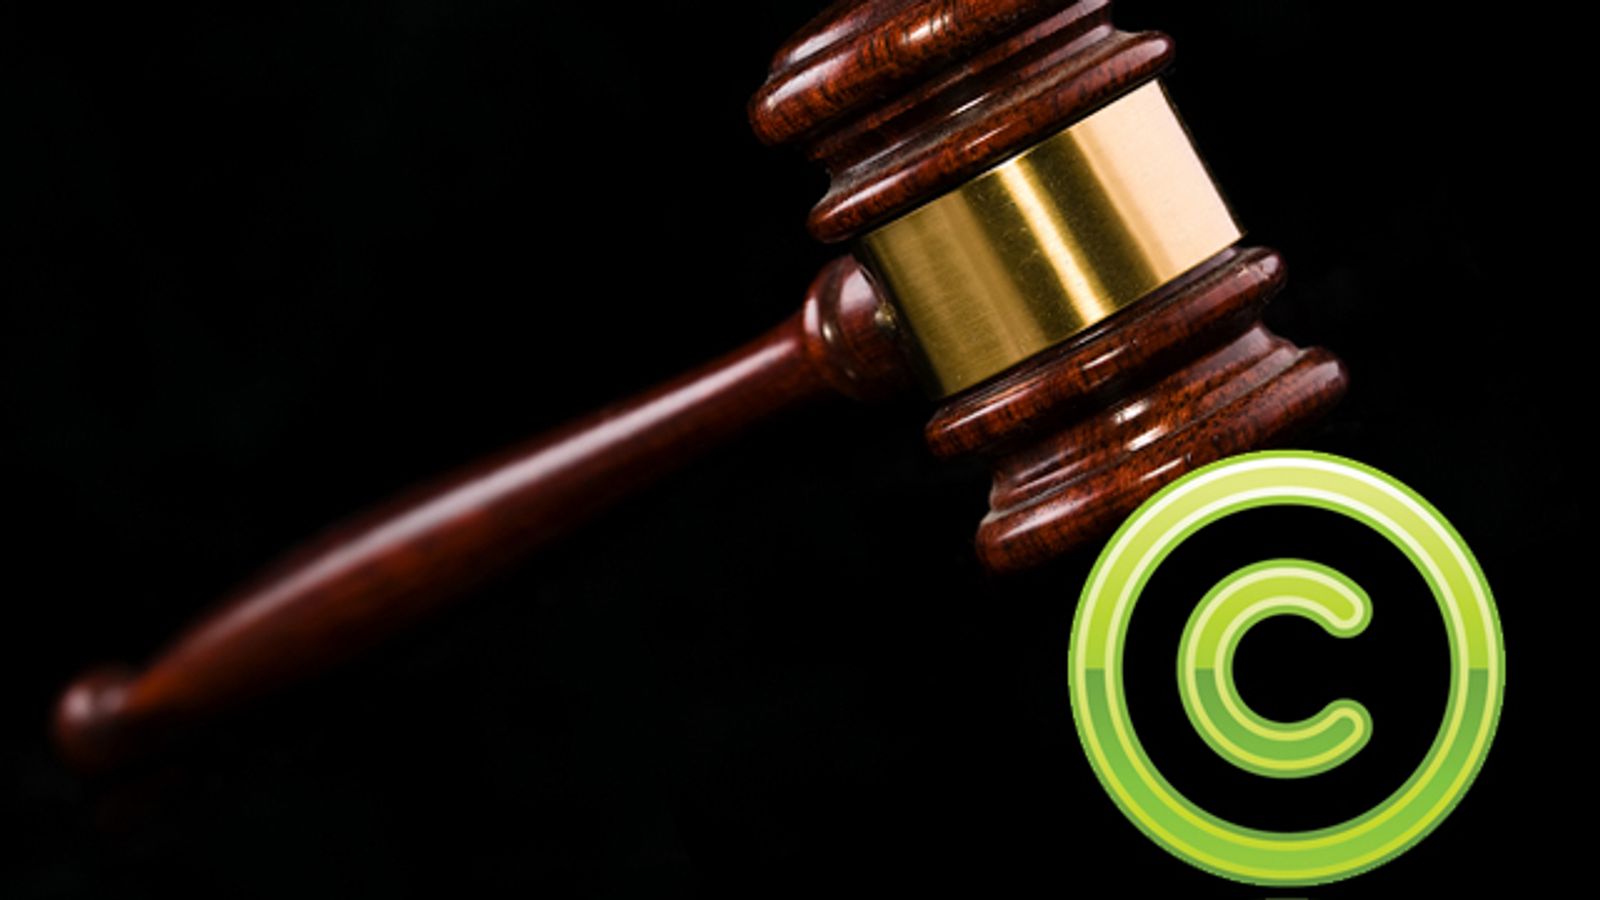 Judiciary Panel Passes ‘Copyright Infringement’ Bill 19-0